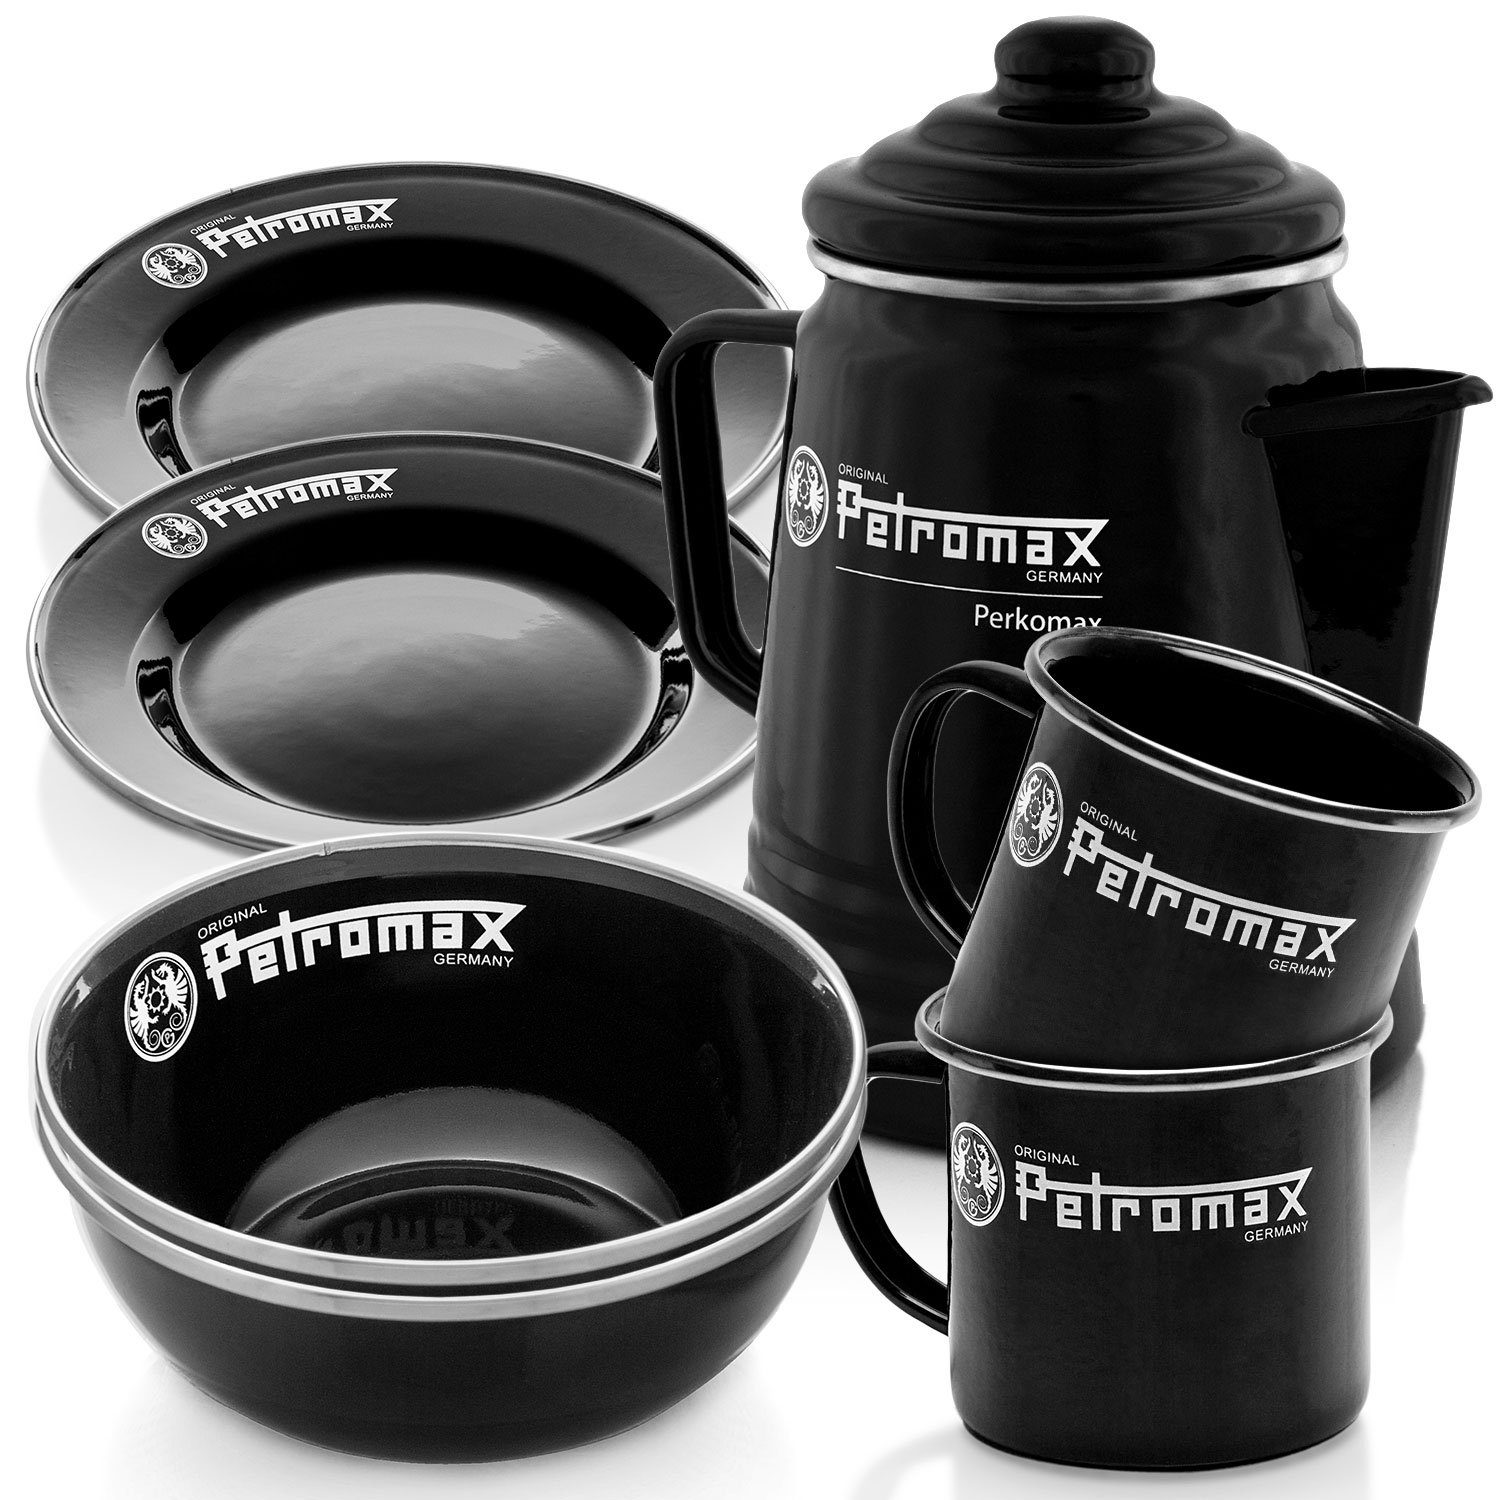 Petromax Perkolator Outdoor Geschirr-Set Perkolator+Becher+Schüssel+Teller in schwarz, 7 teilig Vorteils-Set | Perkolatoren